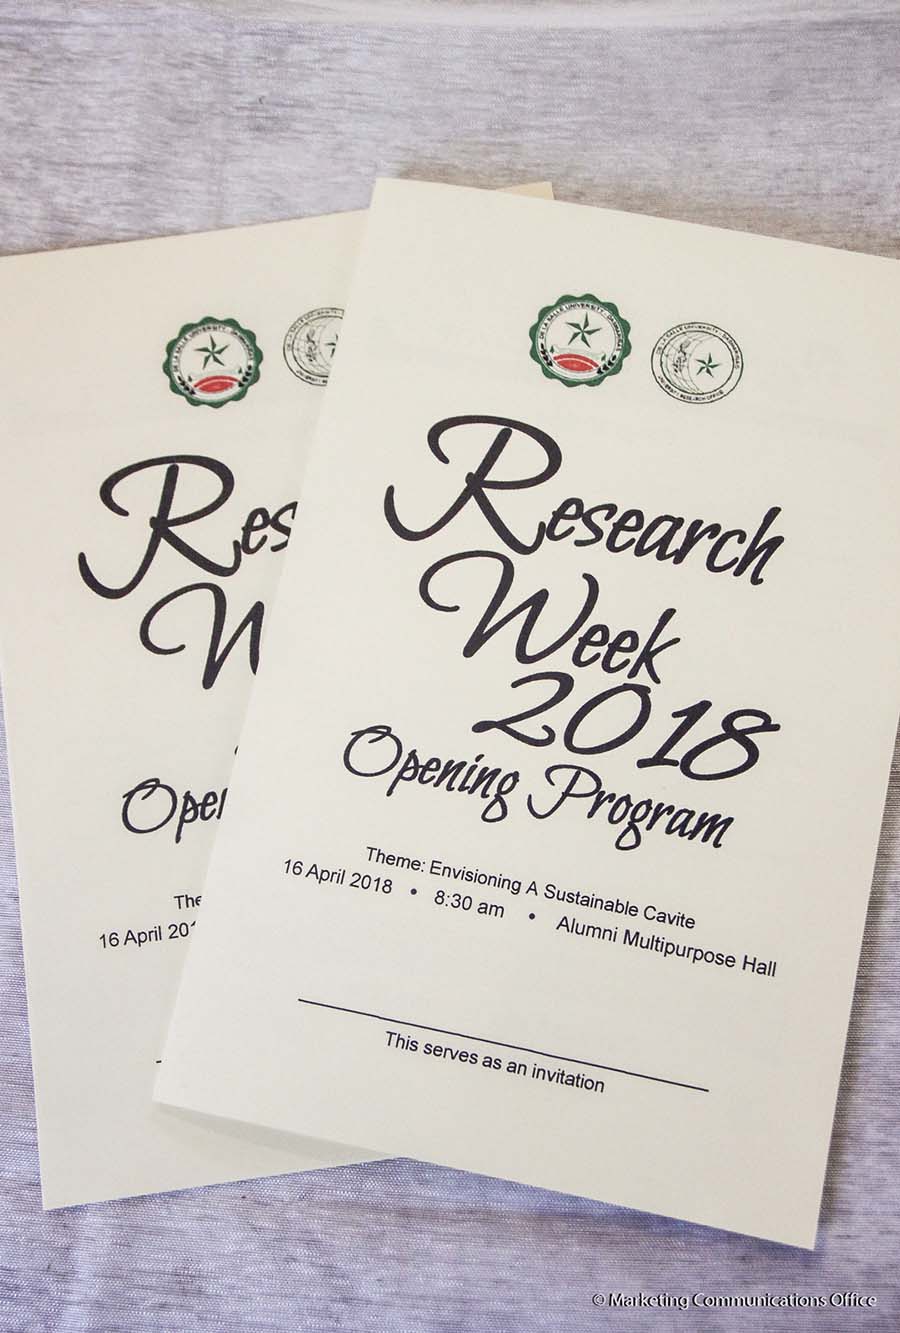 Research Week 2018 - Opening Program